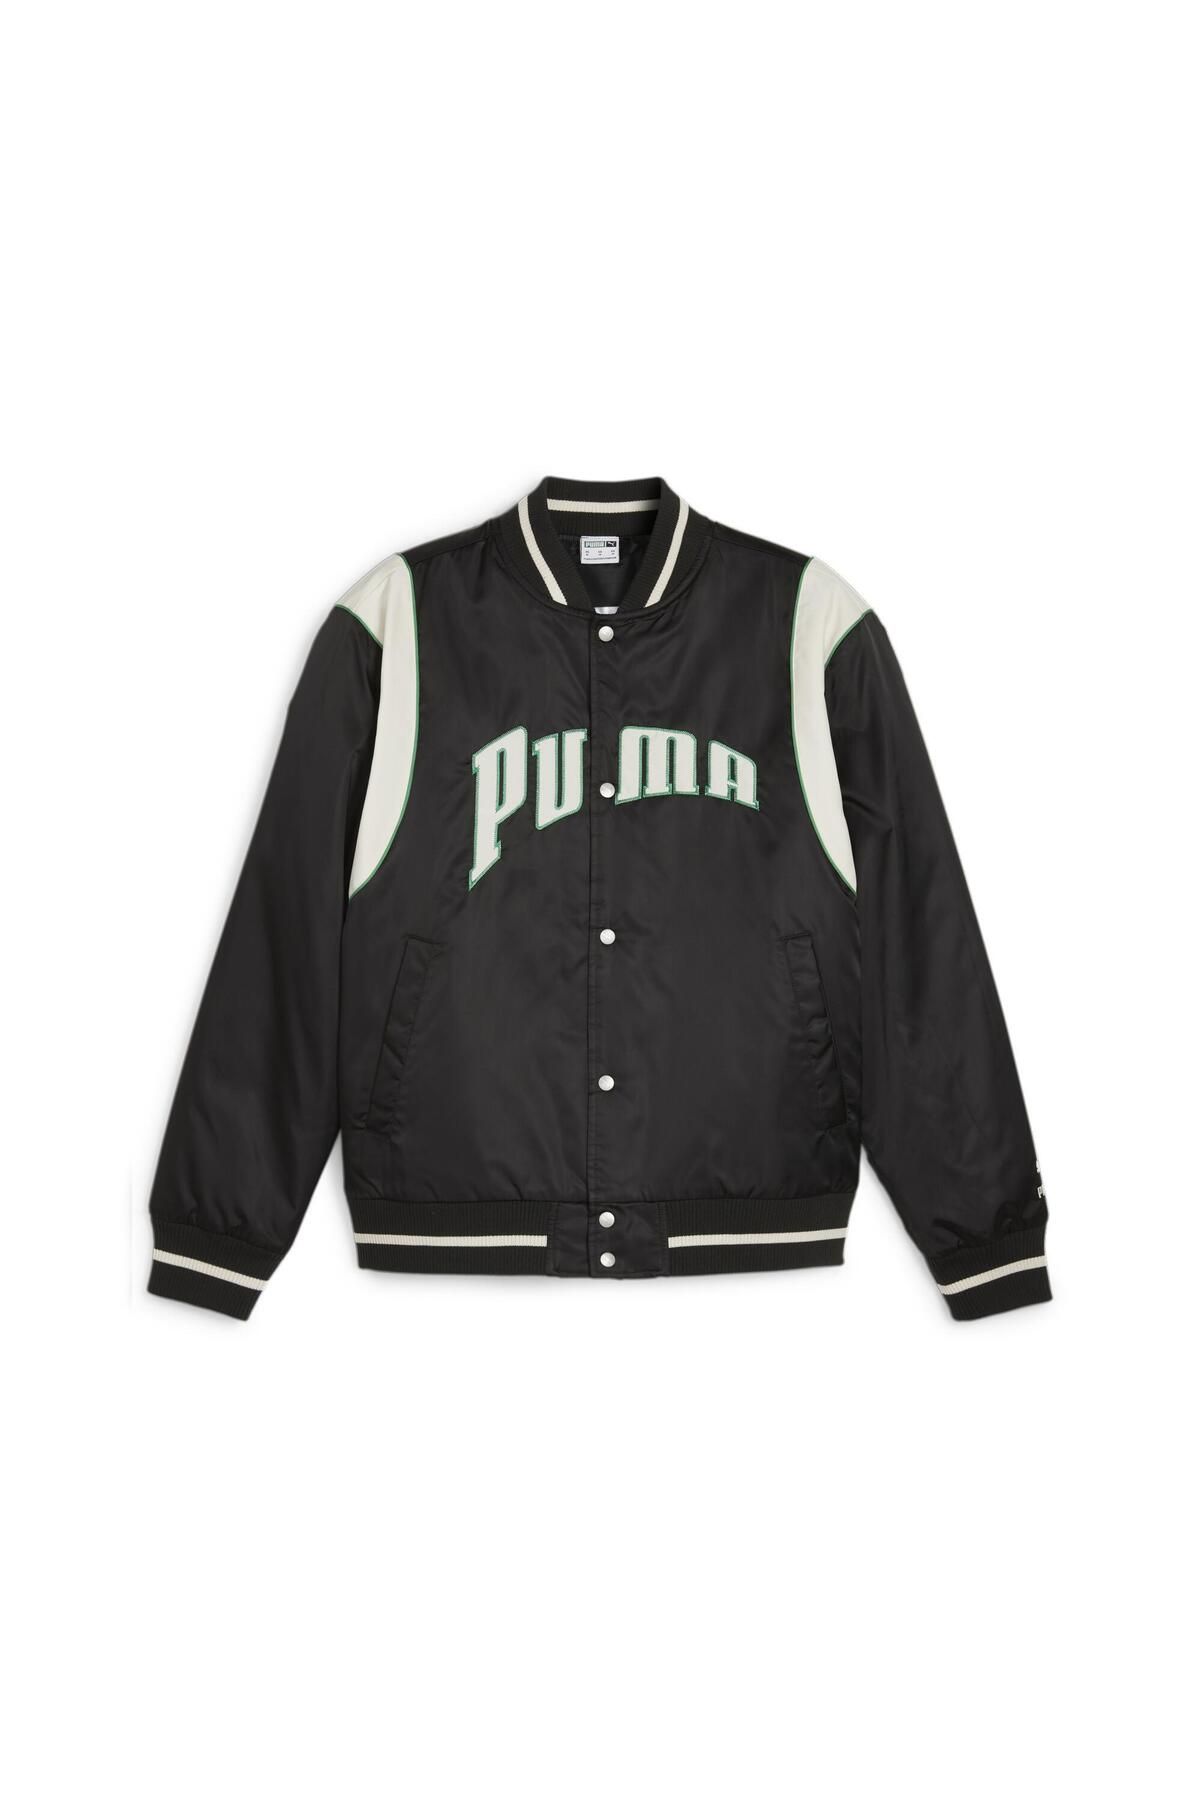 Puma Team Varsity Jacket Erkek Ceket